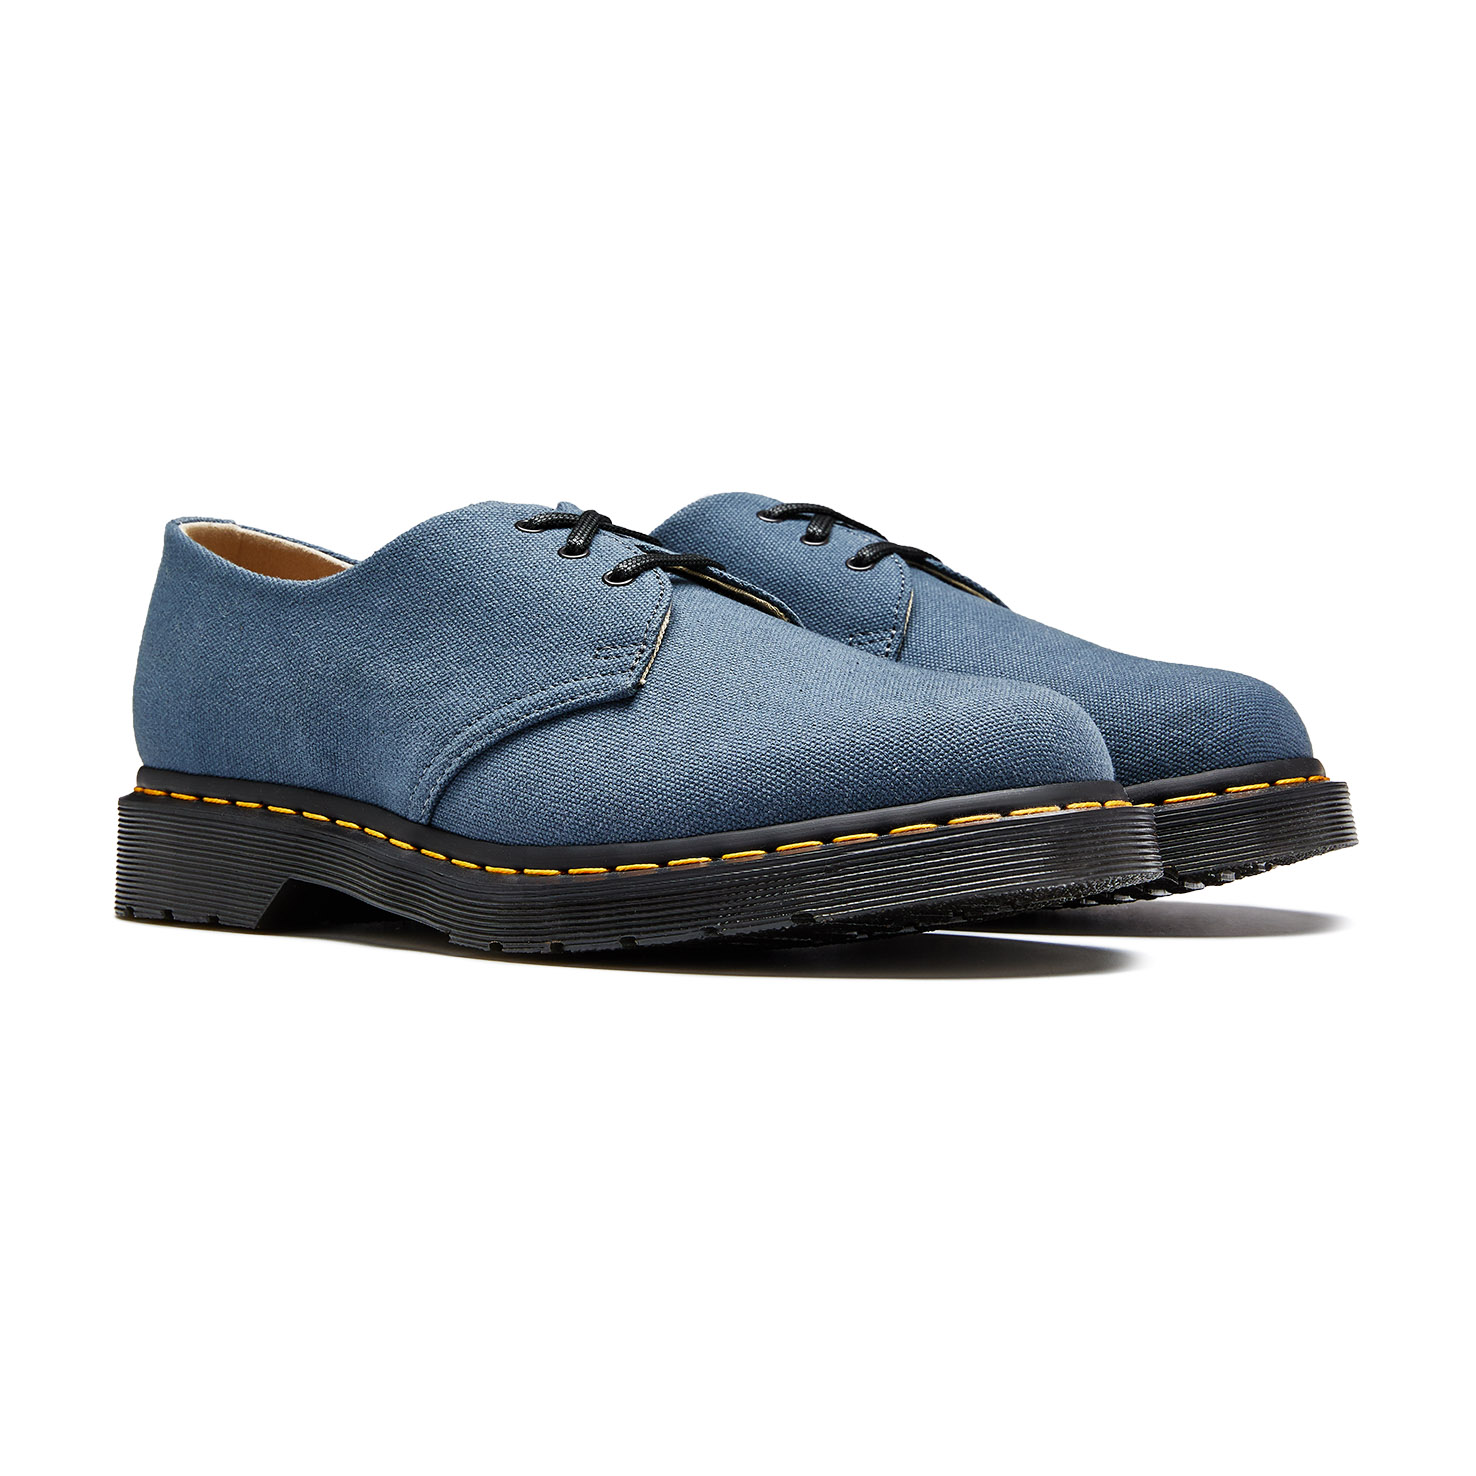 1461 Canvas Oxford Shoes DR.MARTENS, размер 40, цвет синий DM27211 - фото 2